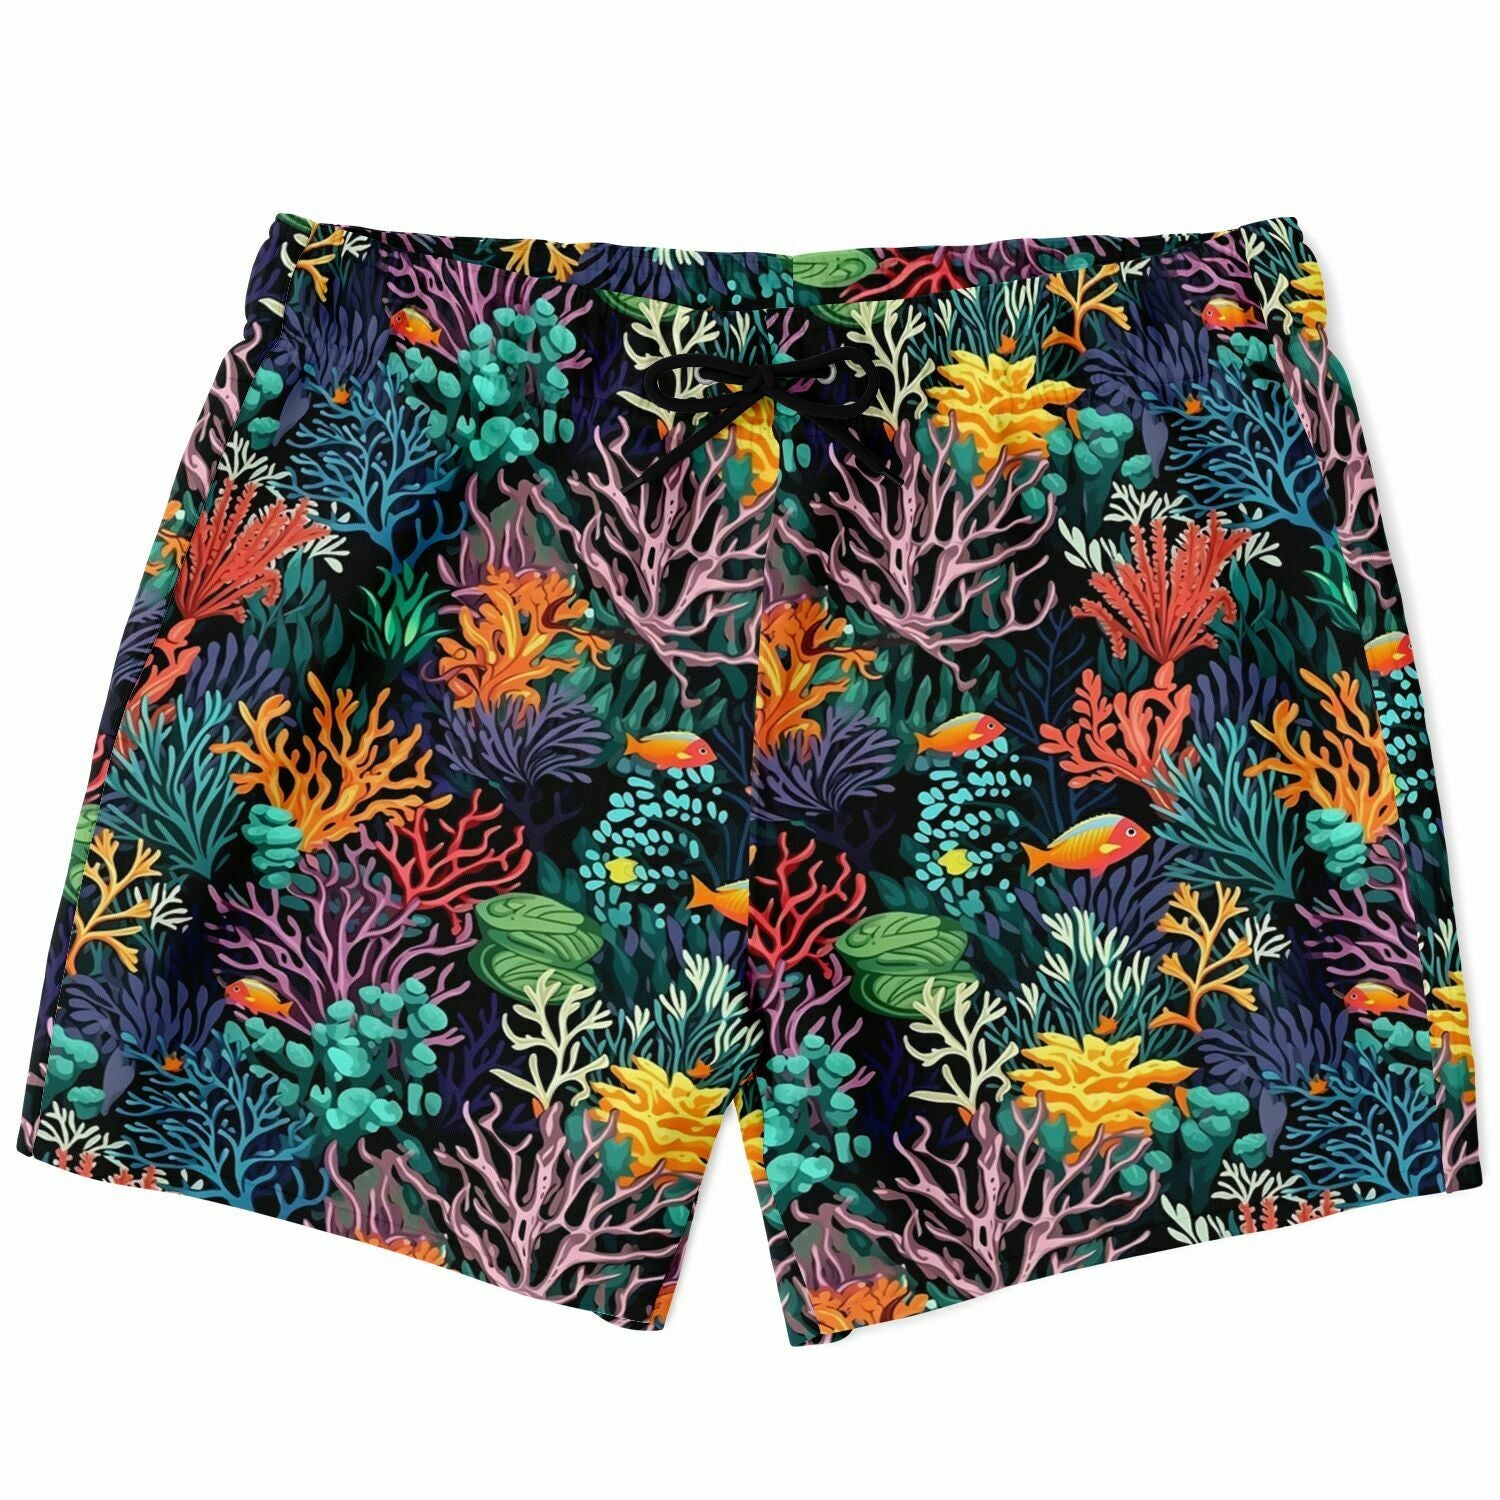 Coral Reef Men Swim Trunks, Sea Ocean Tropical Mid Length Shorts Beach Surf Swimwear Front Pockets Mesh Lining Drawstring Bathing Suit Starcove Fashion